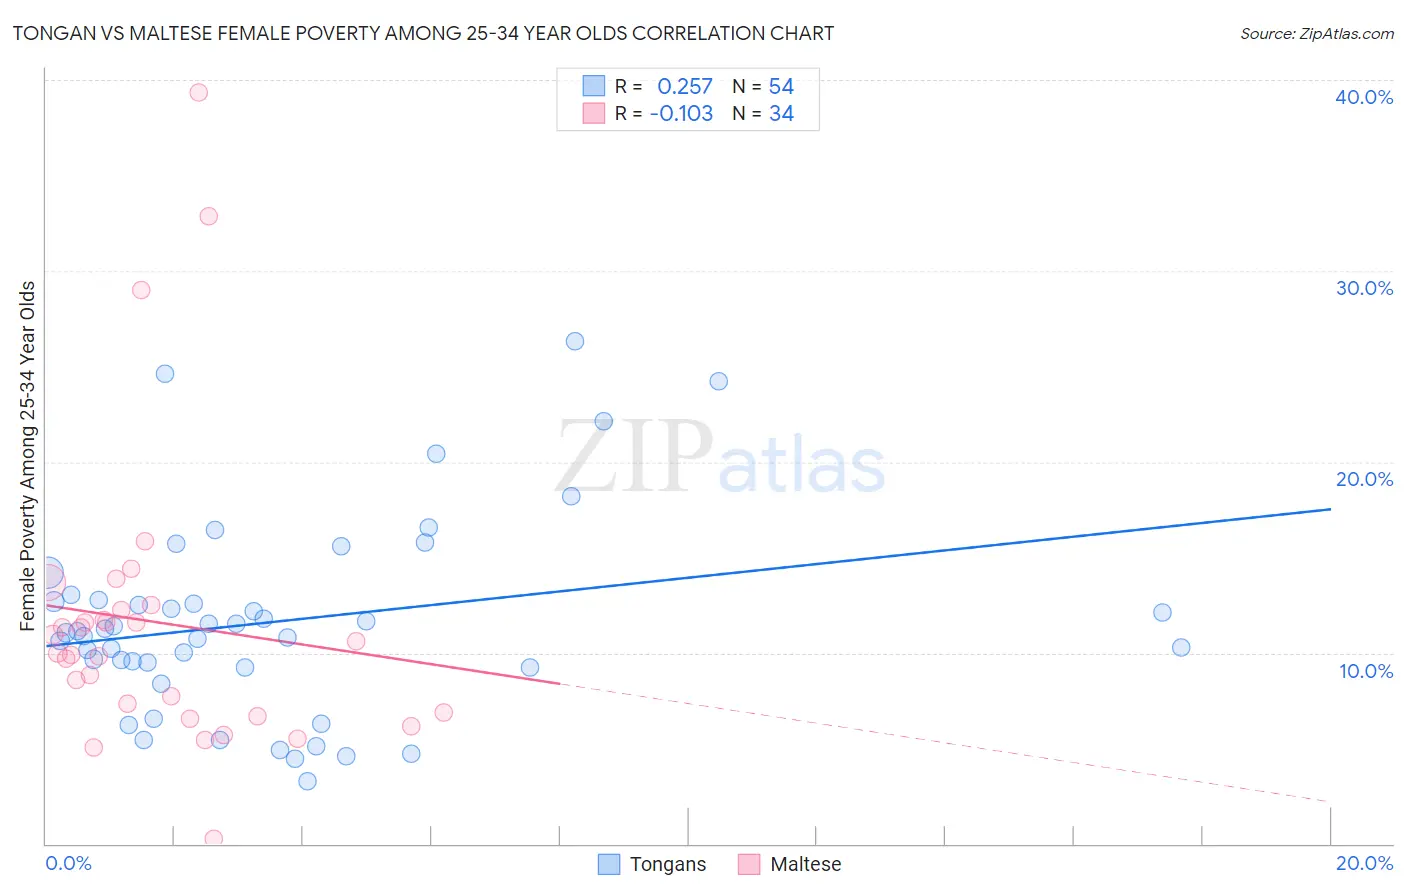 Tongan vs Maltese Female Poverty Among 25-34 Year Olds